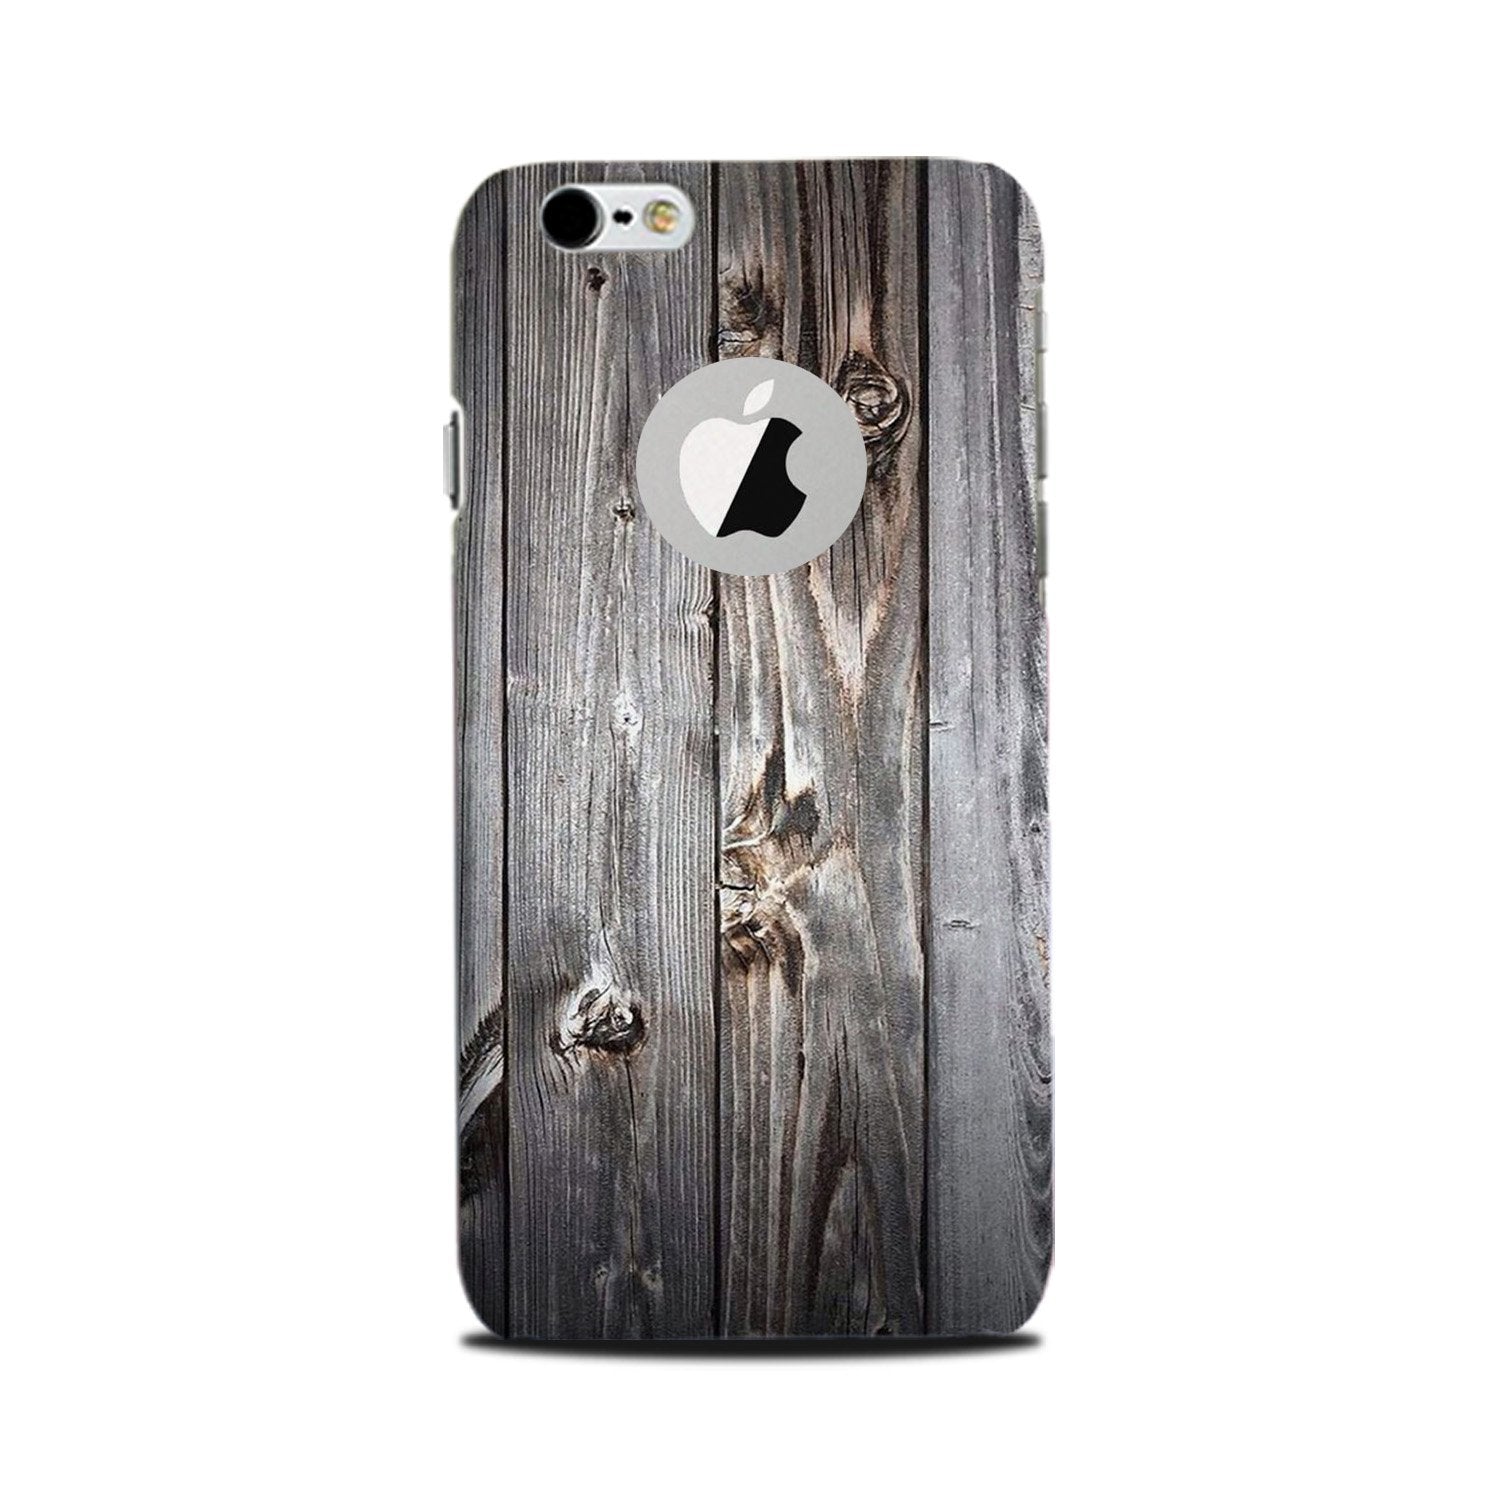 Wooden Look Case for iPhone 6 Plus / 6s Plus logo cut   (Design - 114)